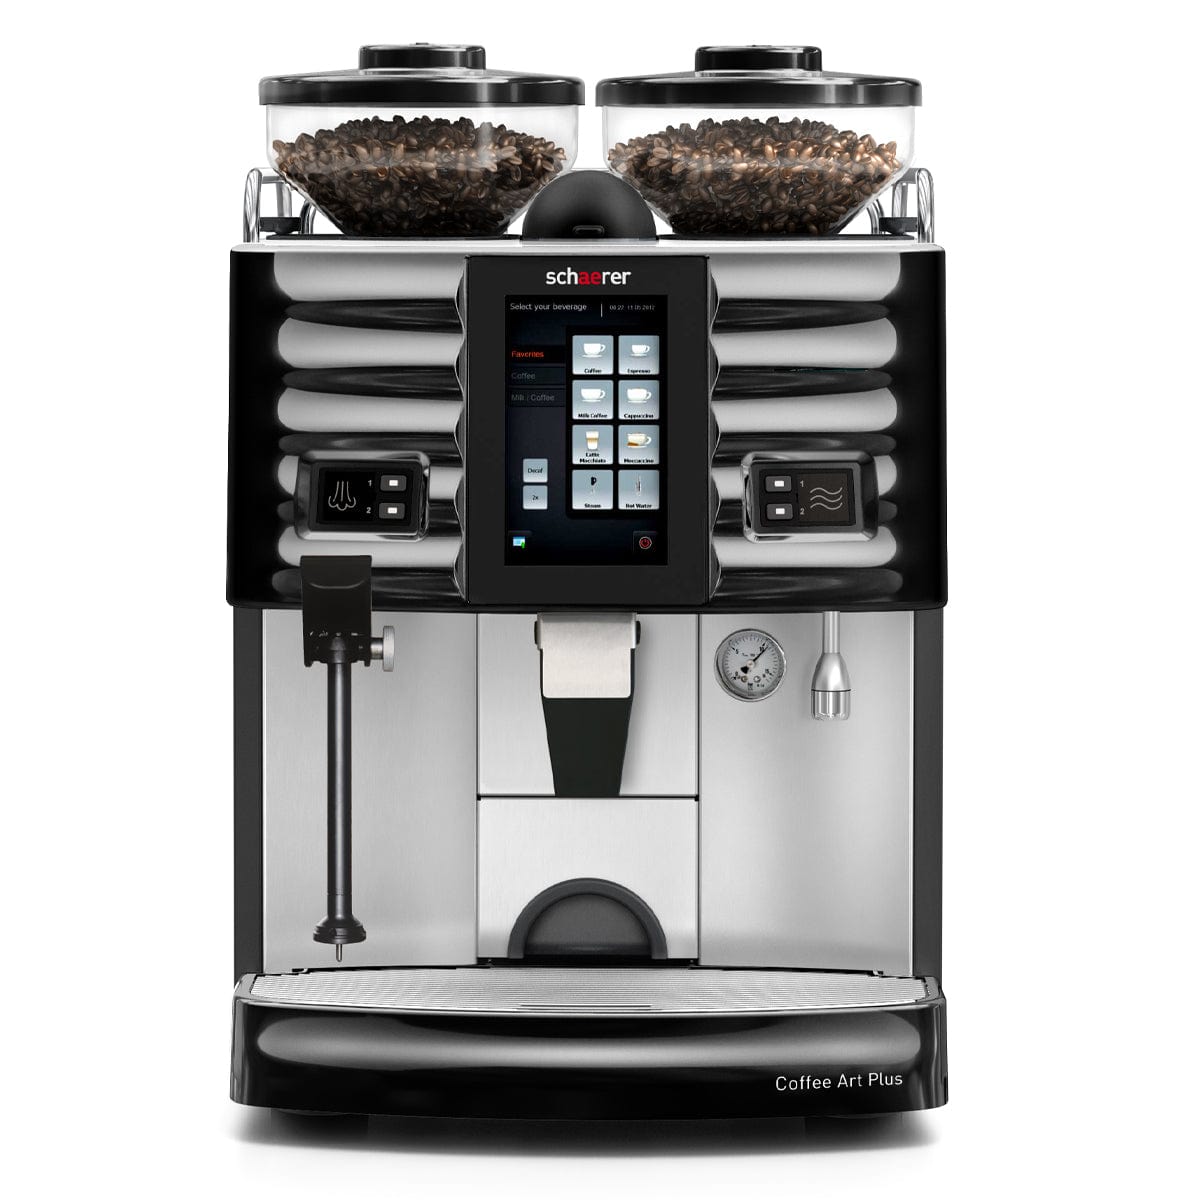  Super-Automatic Espresso Machines